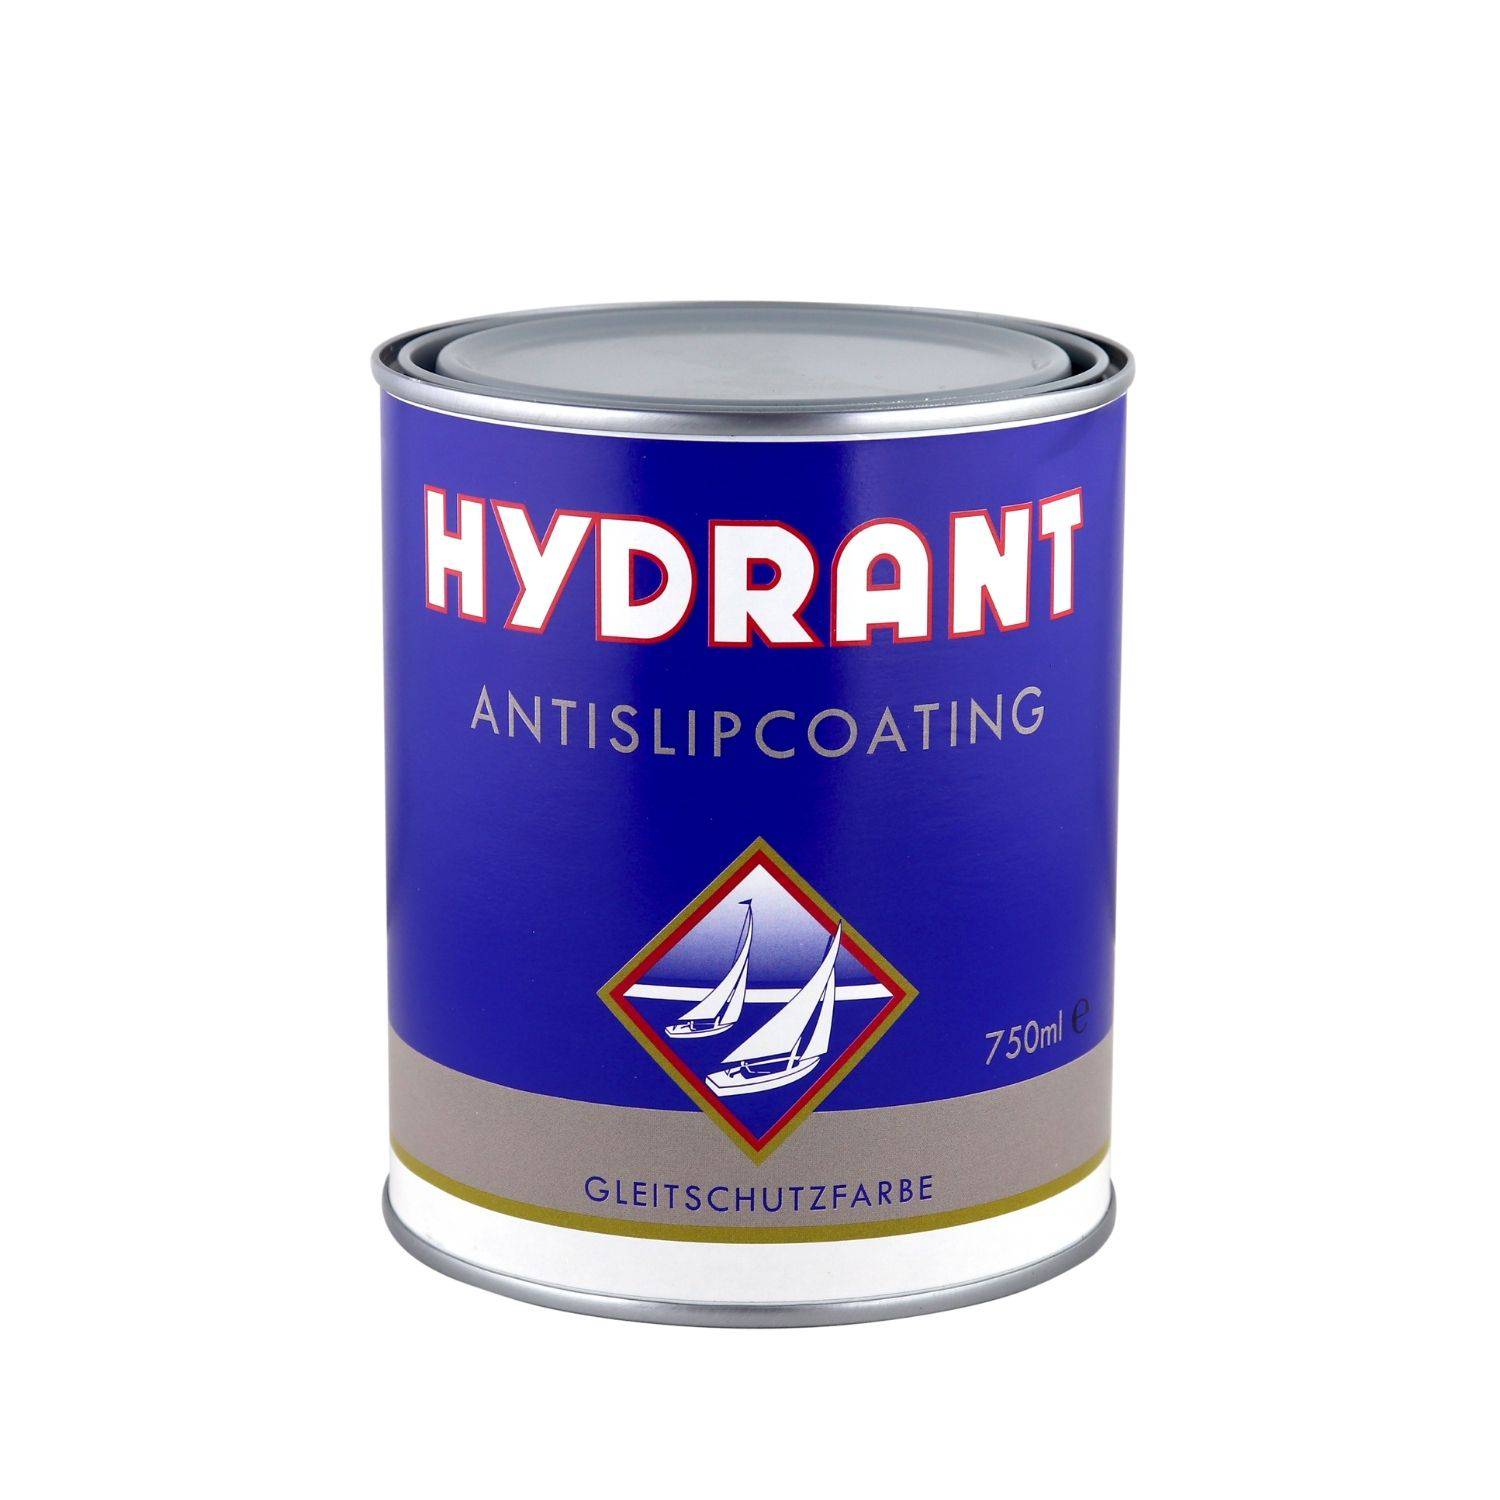 Hydrant antislipcoating